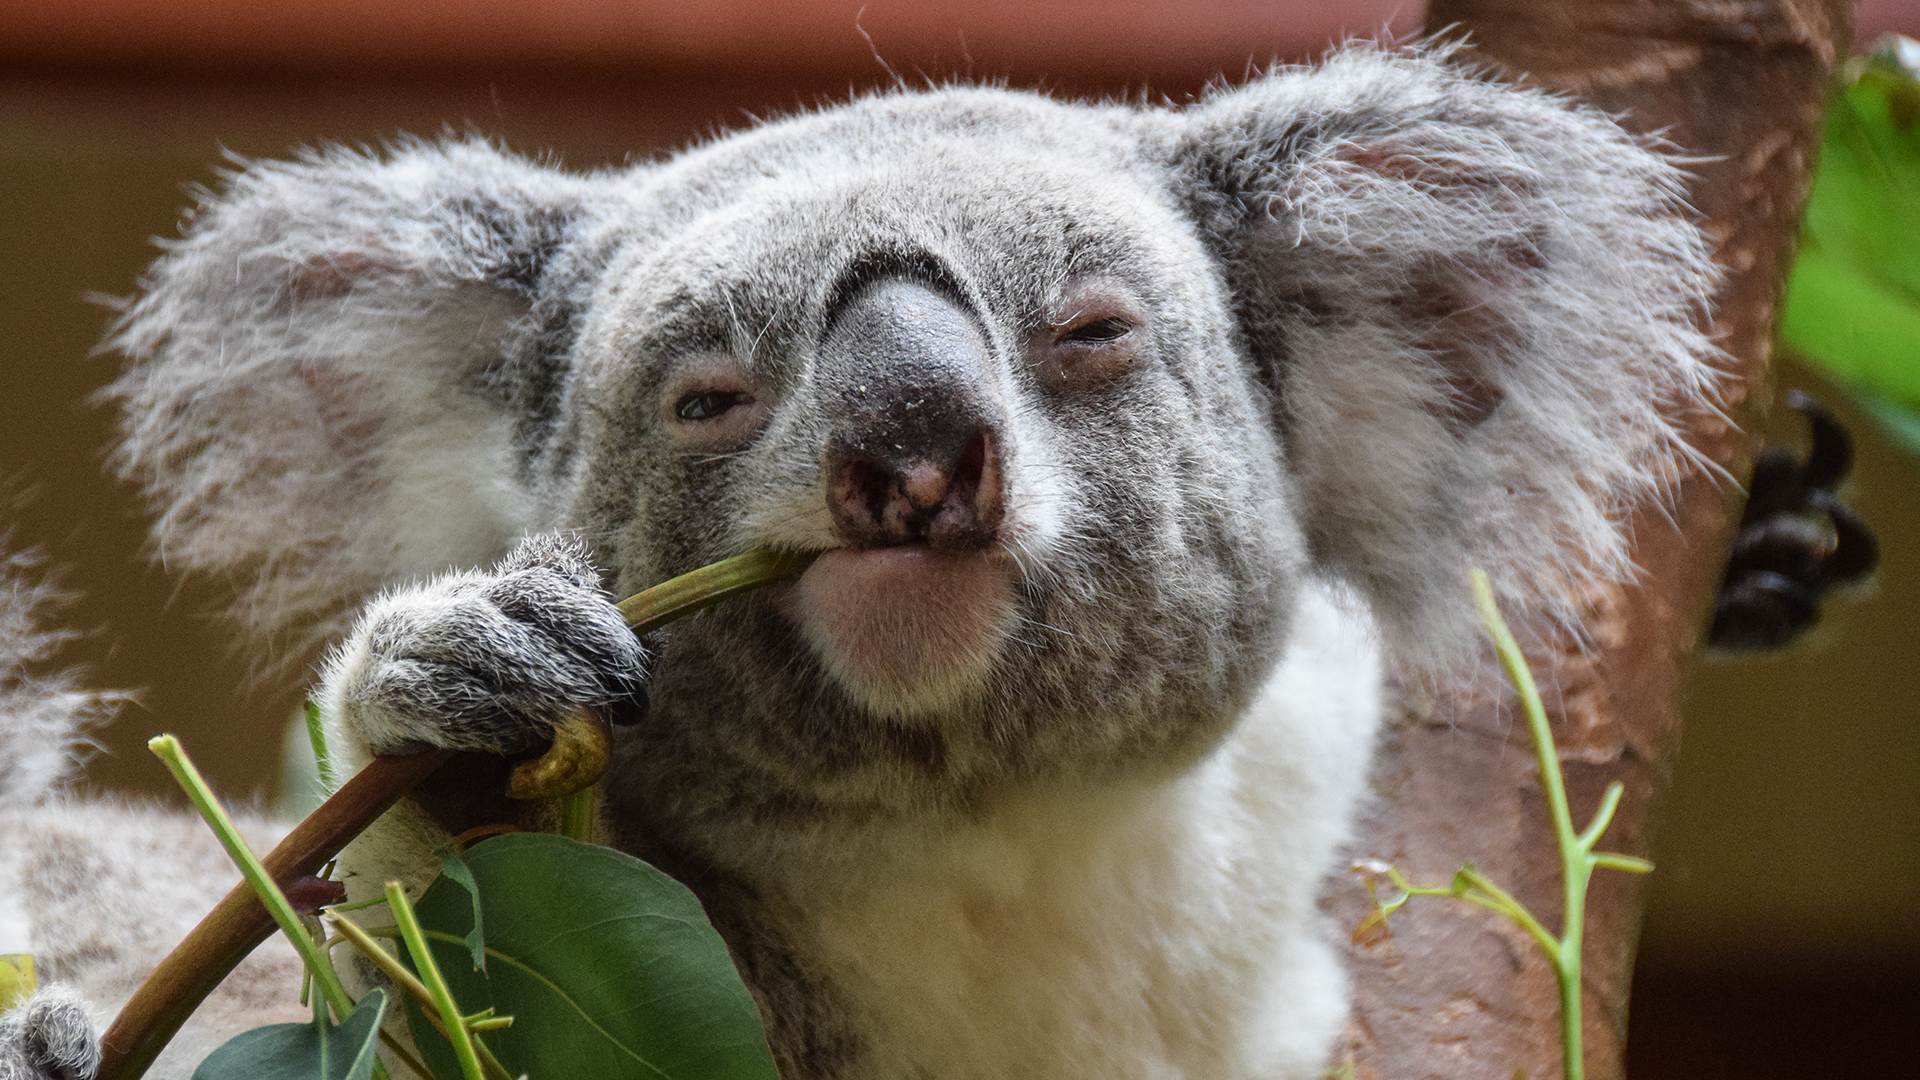 Chlamydia is killing Australia's koalas, but ambitious…